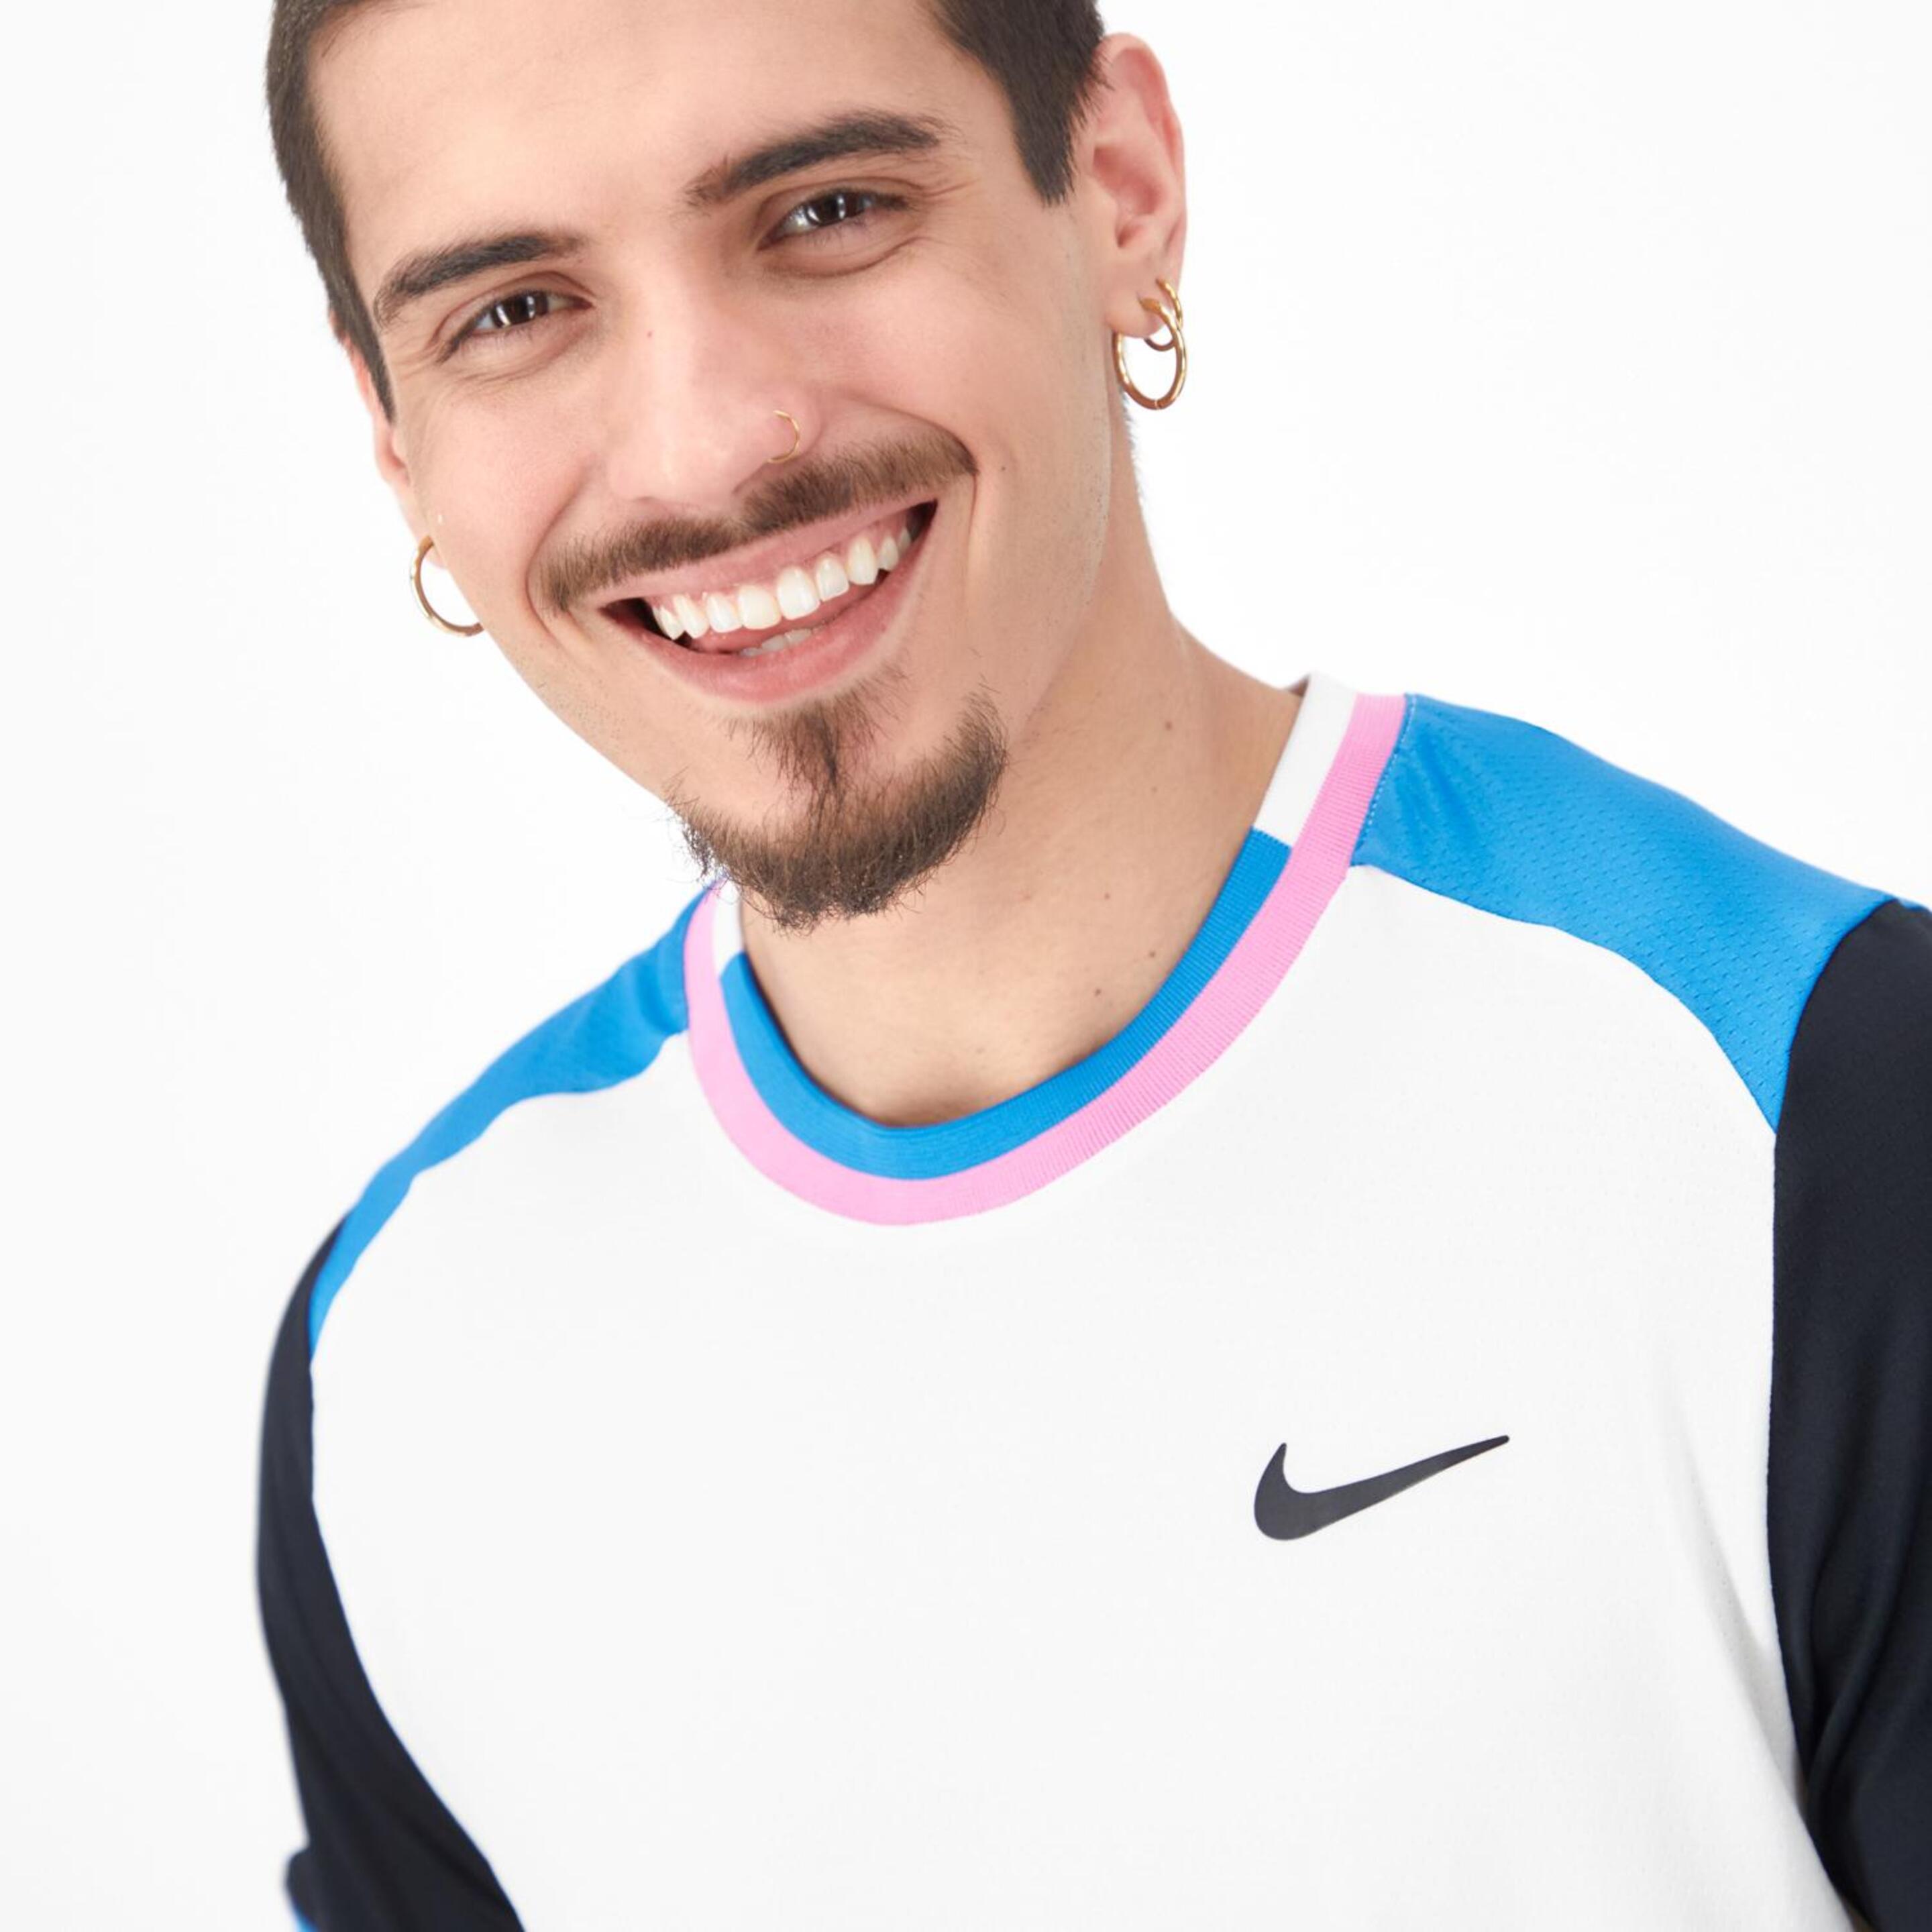 Nike Advantage Court - Blanco - Camiseta Tenis Hombre